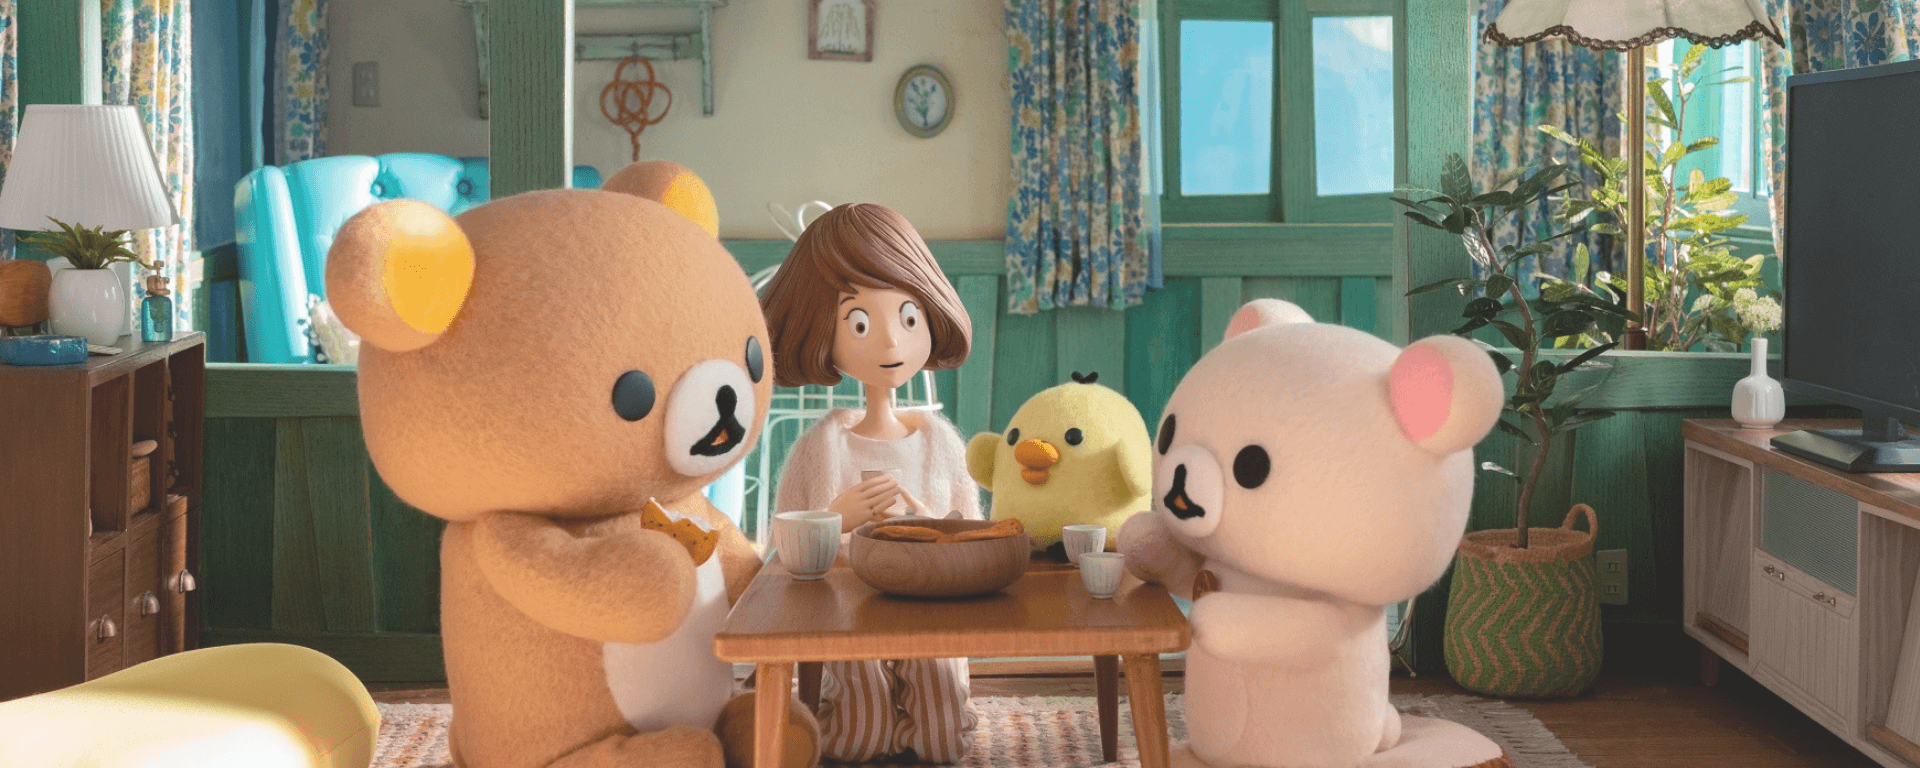 Review: 'Rilakkuma and Kaoru' delivers zen and cuteness